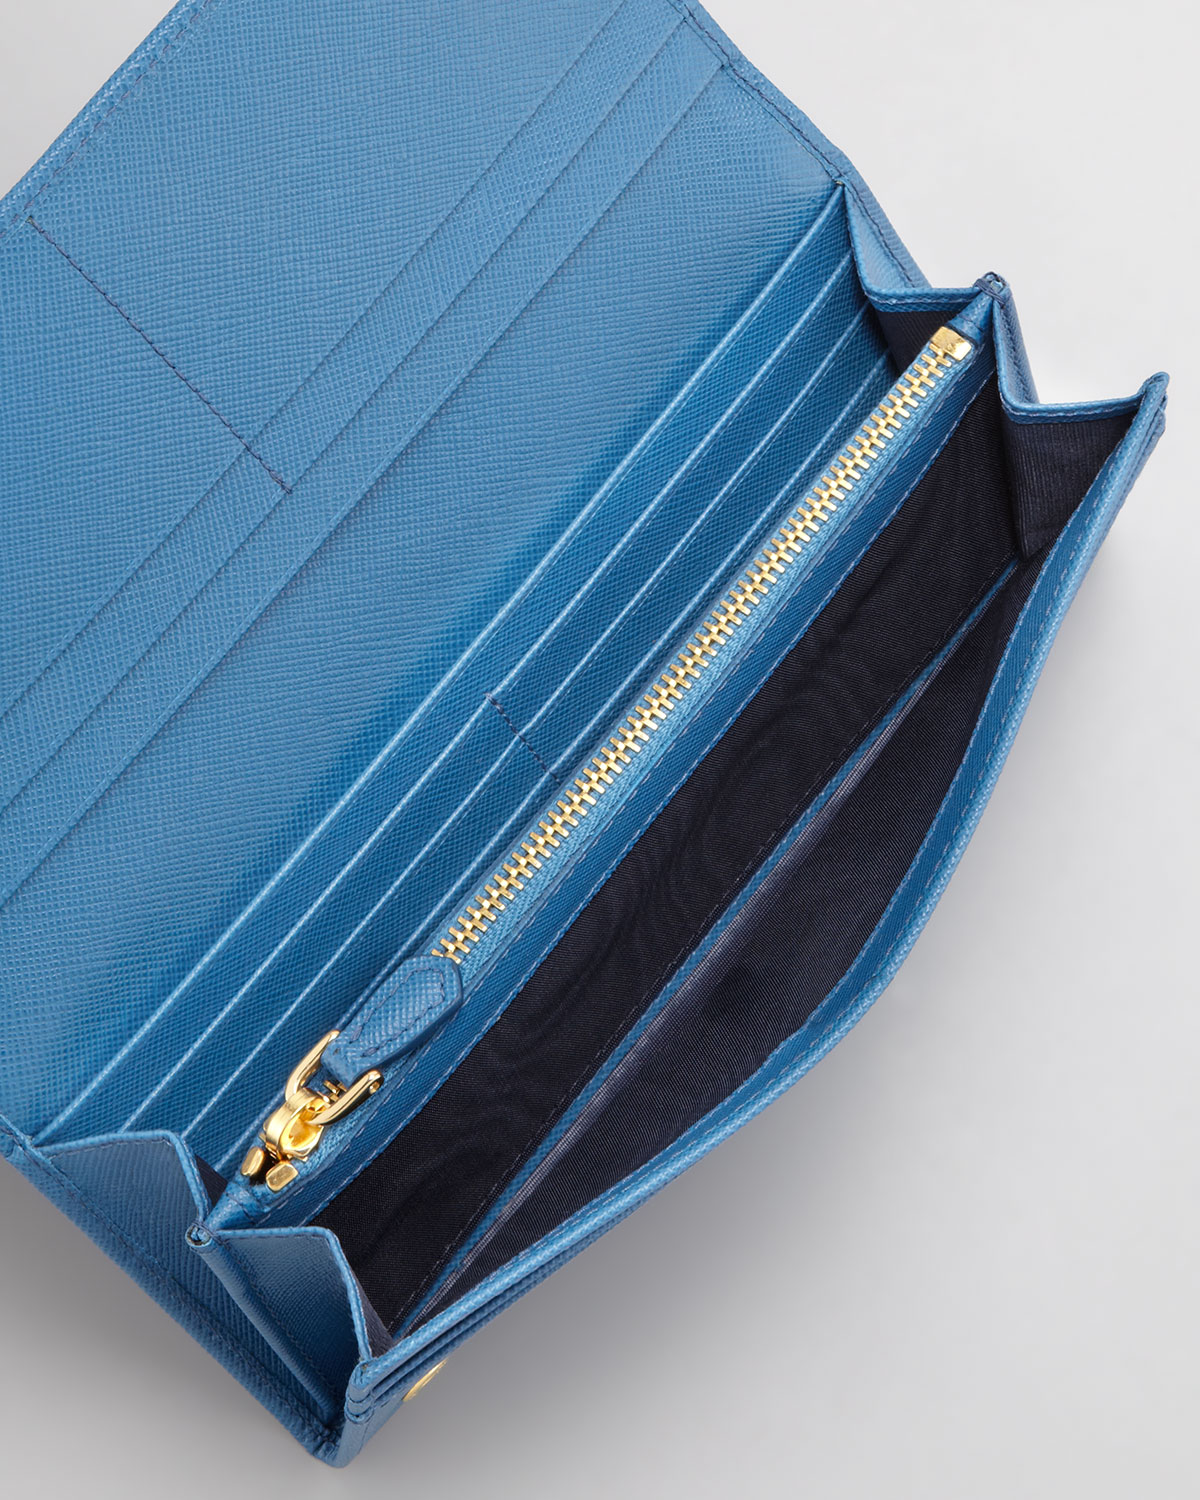 Prada Saffiano Triangle Continental Flap Wallet in Blue | Lyst  